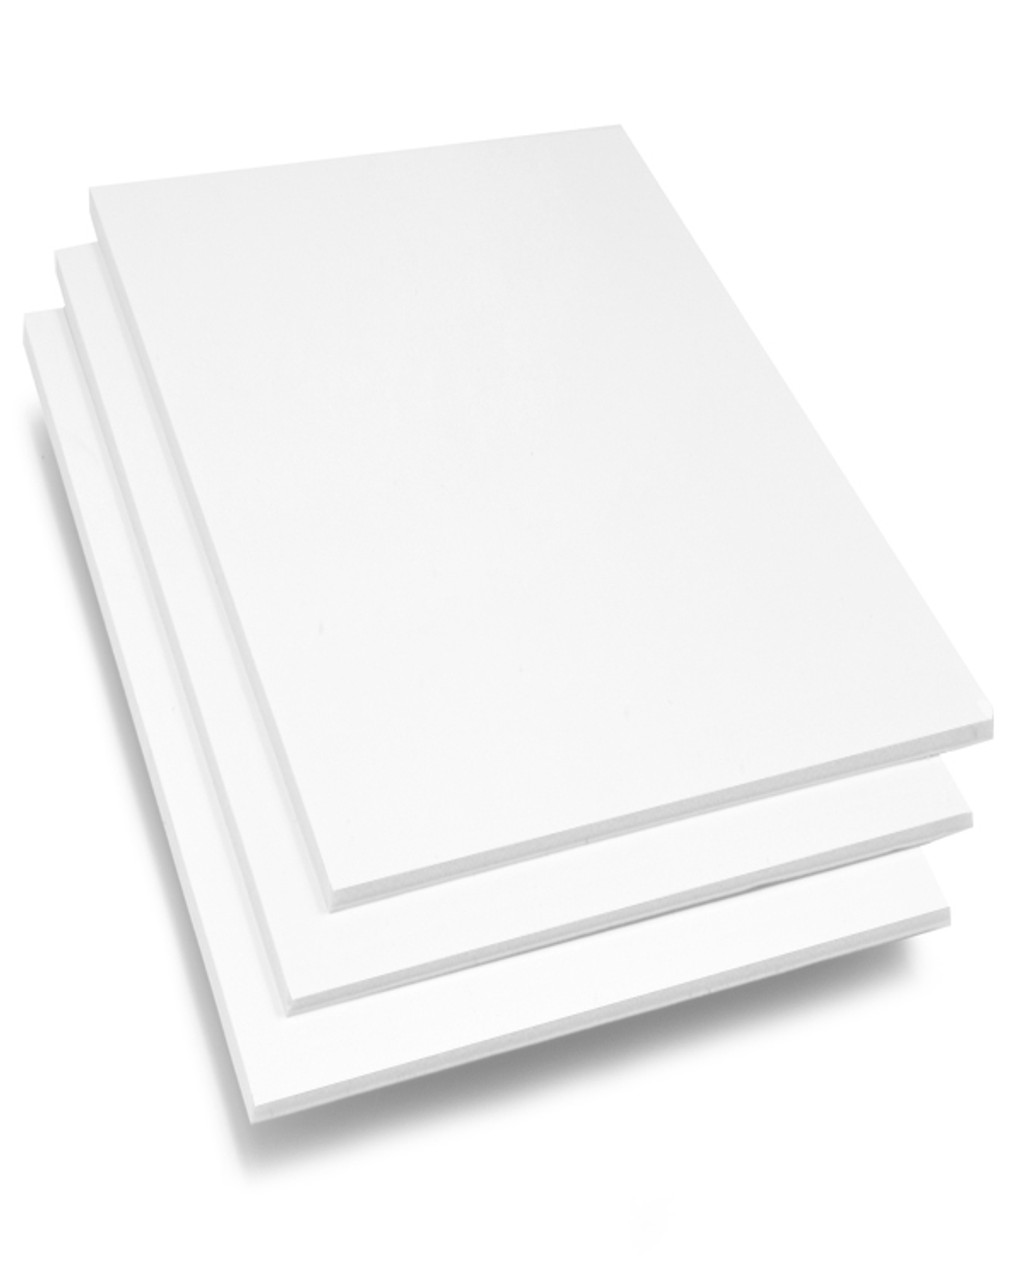 Foamboard - White 10MM (Pack of 5)